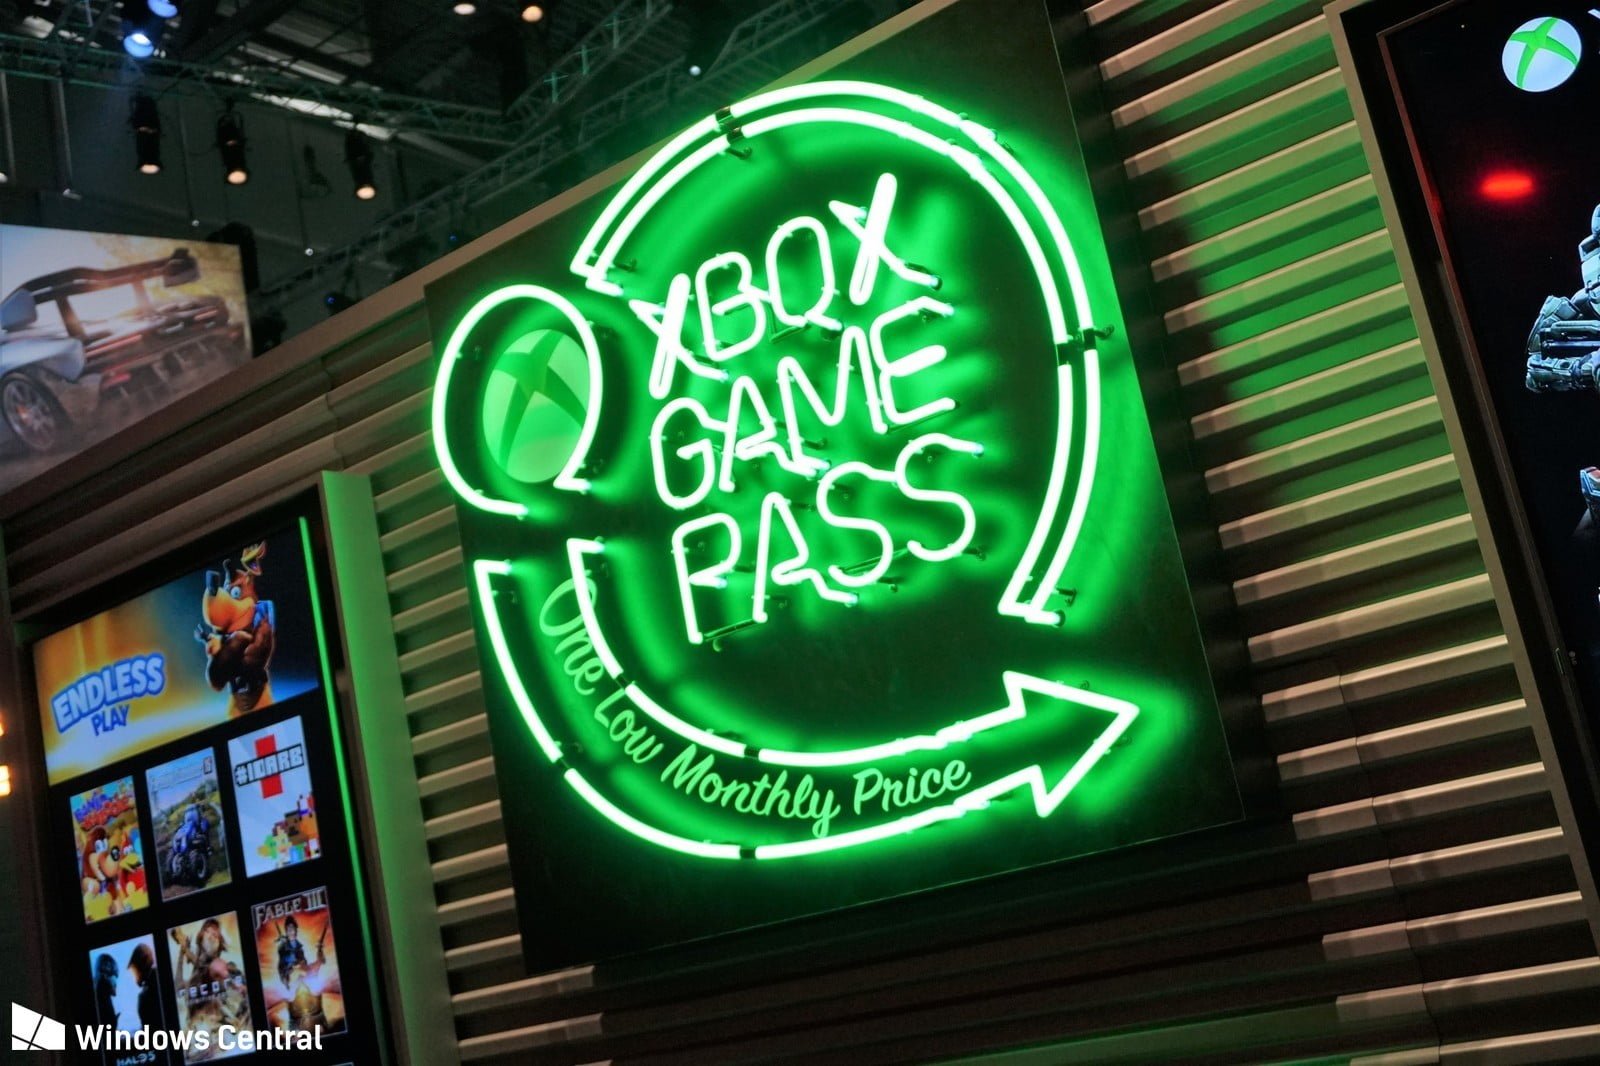 Xbox Game Pass kütüphanesi